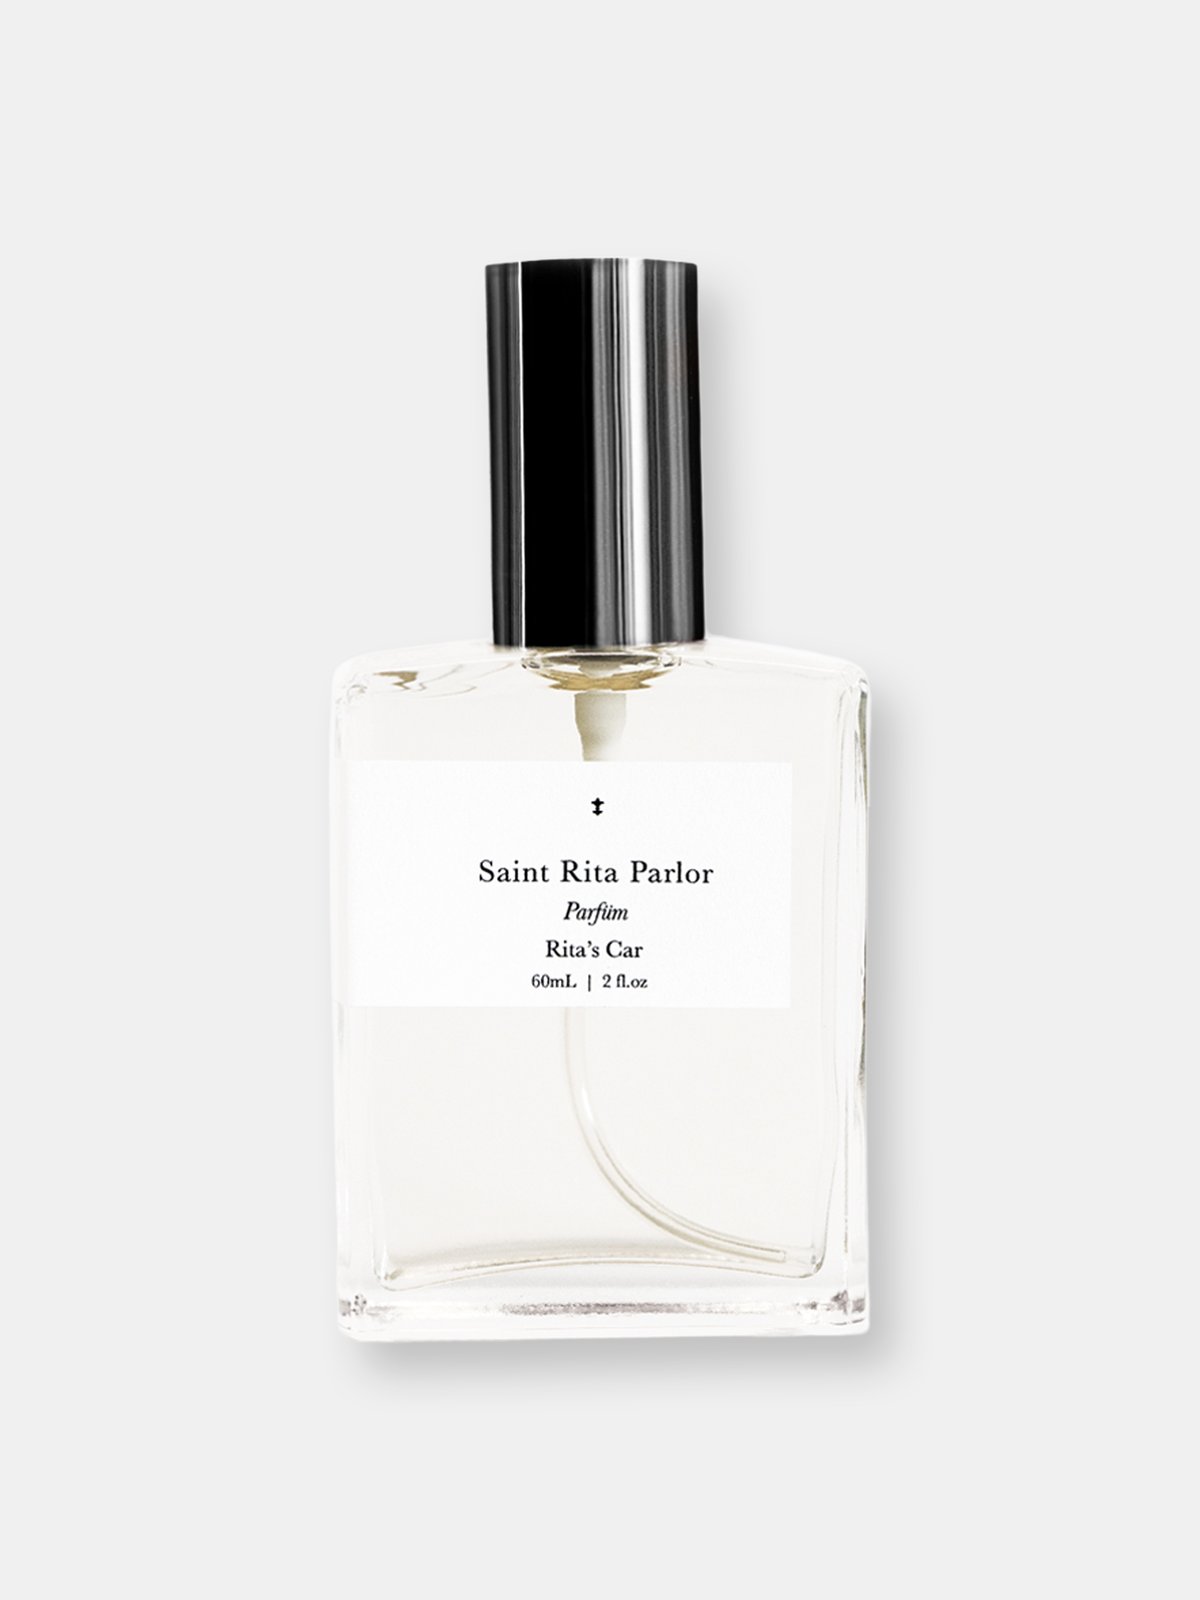 Saint Rita Parlor Parfum, Rita's Car Fragrance, 60 mL